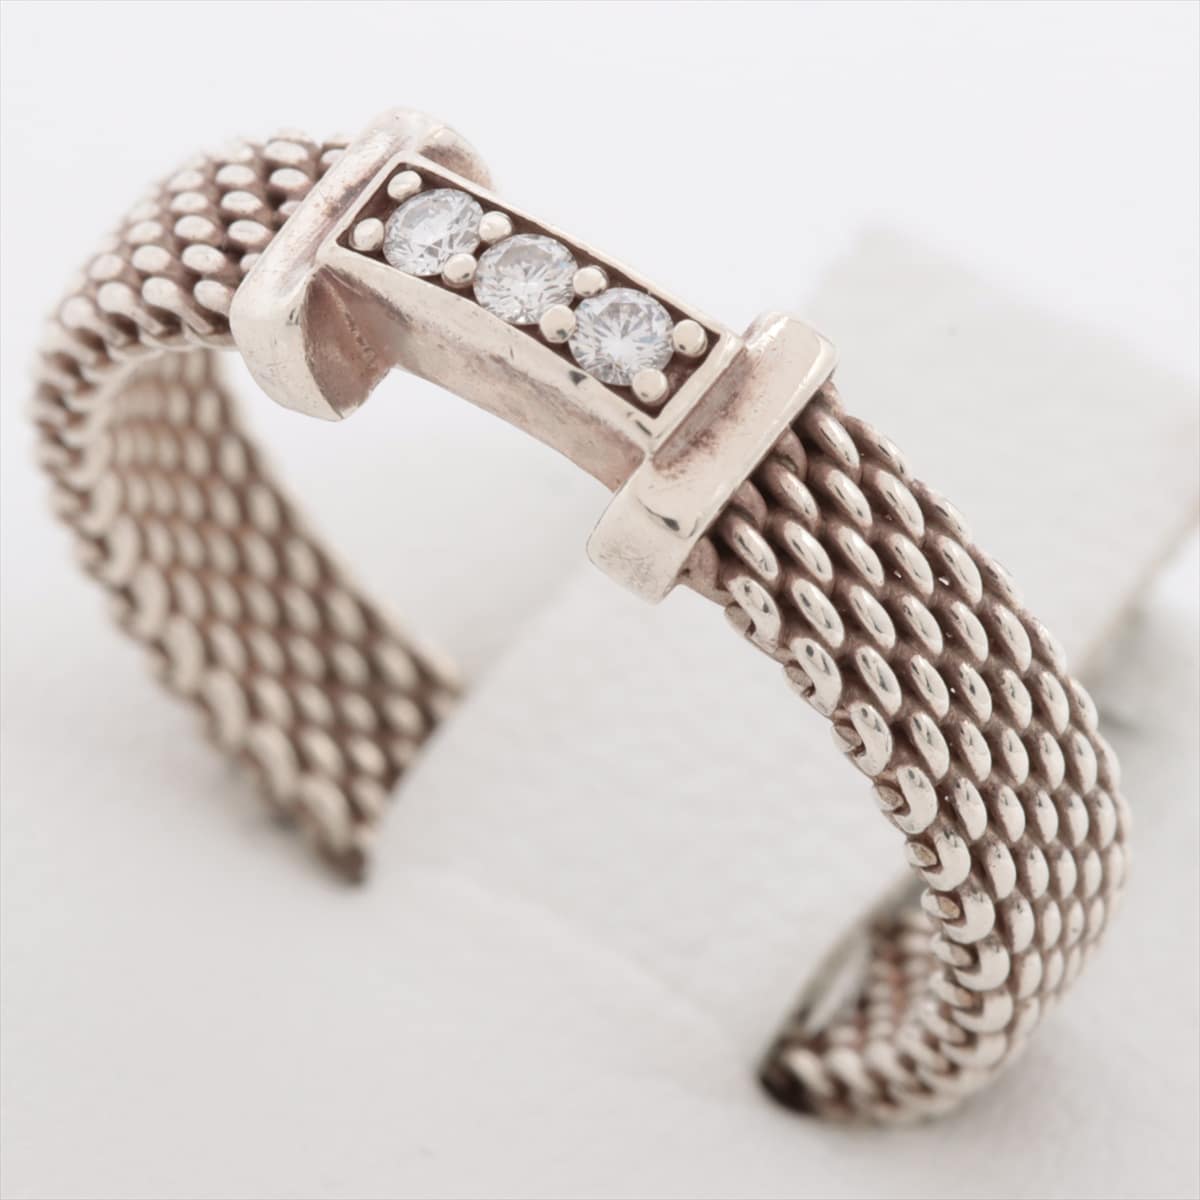 Tiffany Somerset rings 925 2.1g Silver 3P diamond